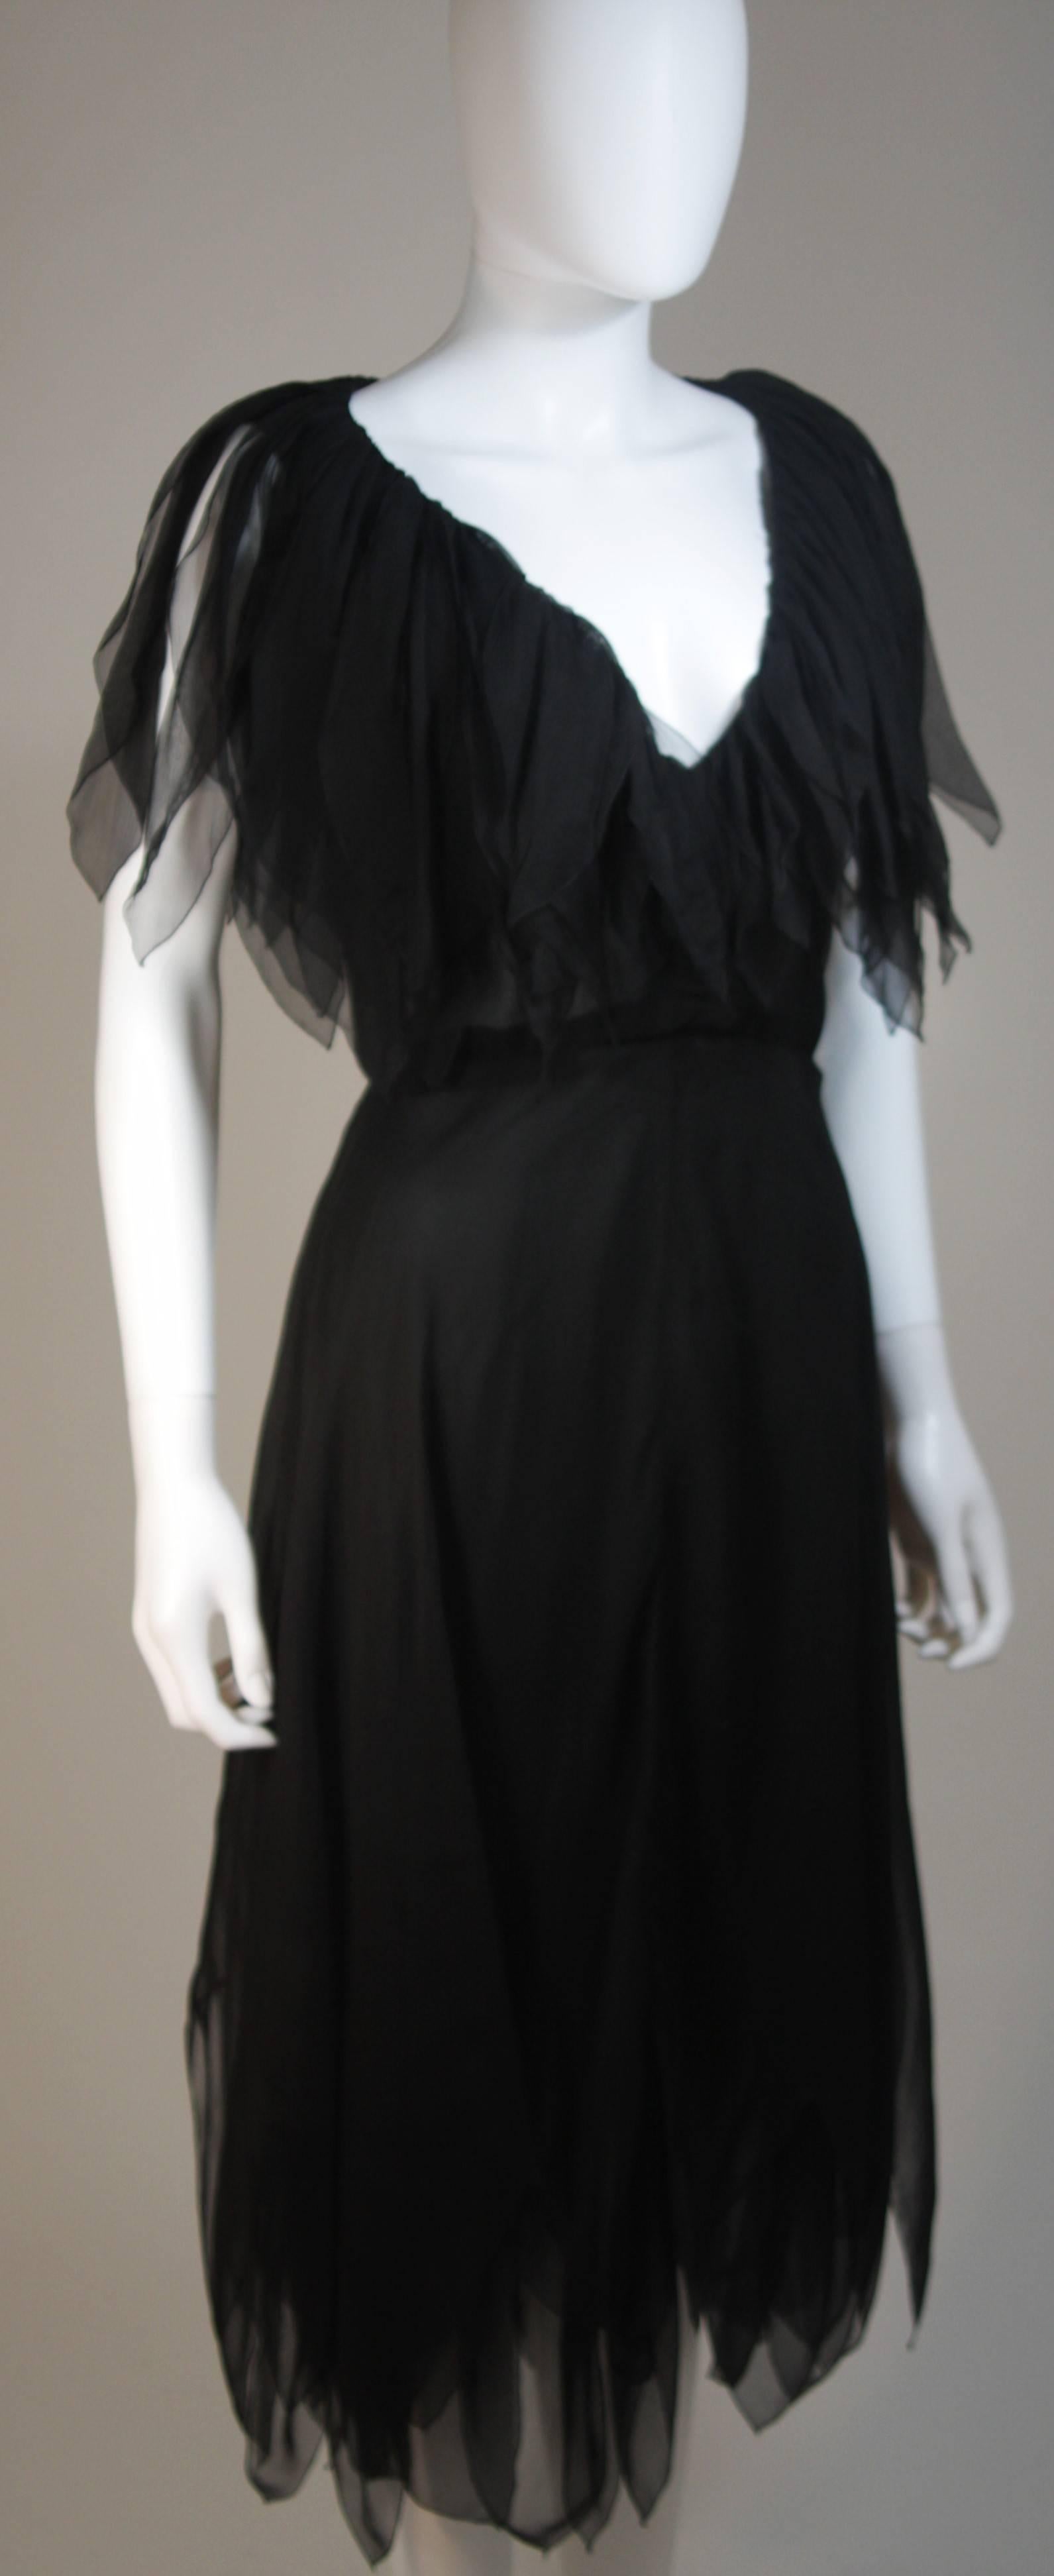 CHRISTIAN DIOR COUTURE Layered Black Silk Chiffon Cocktail Dress Size 4-6 2